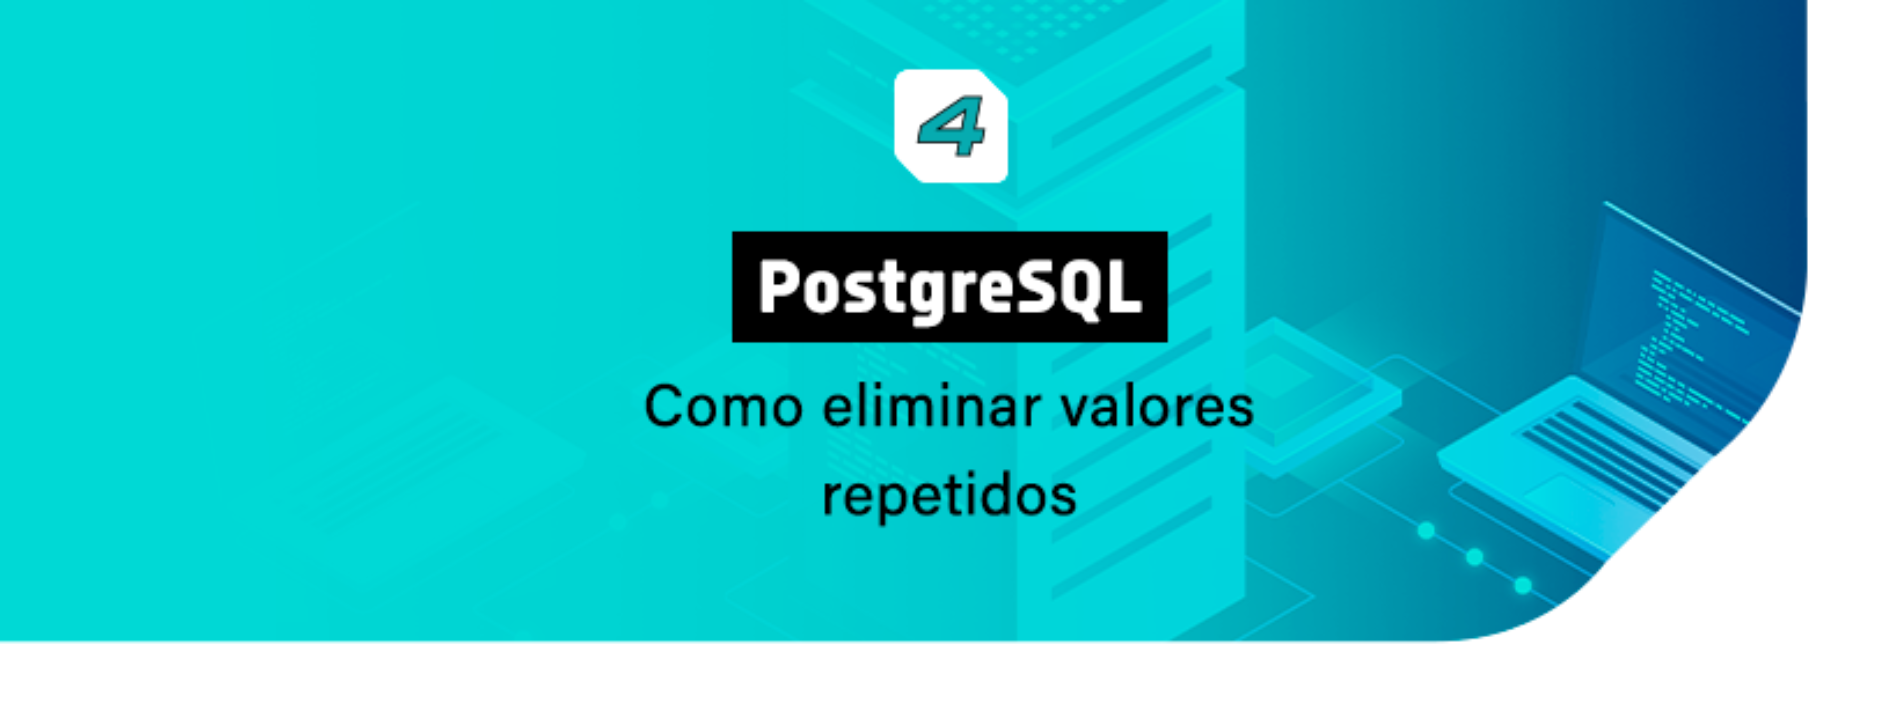 PostgreSQL – Como eliminar valores repetidos